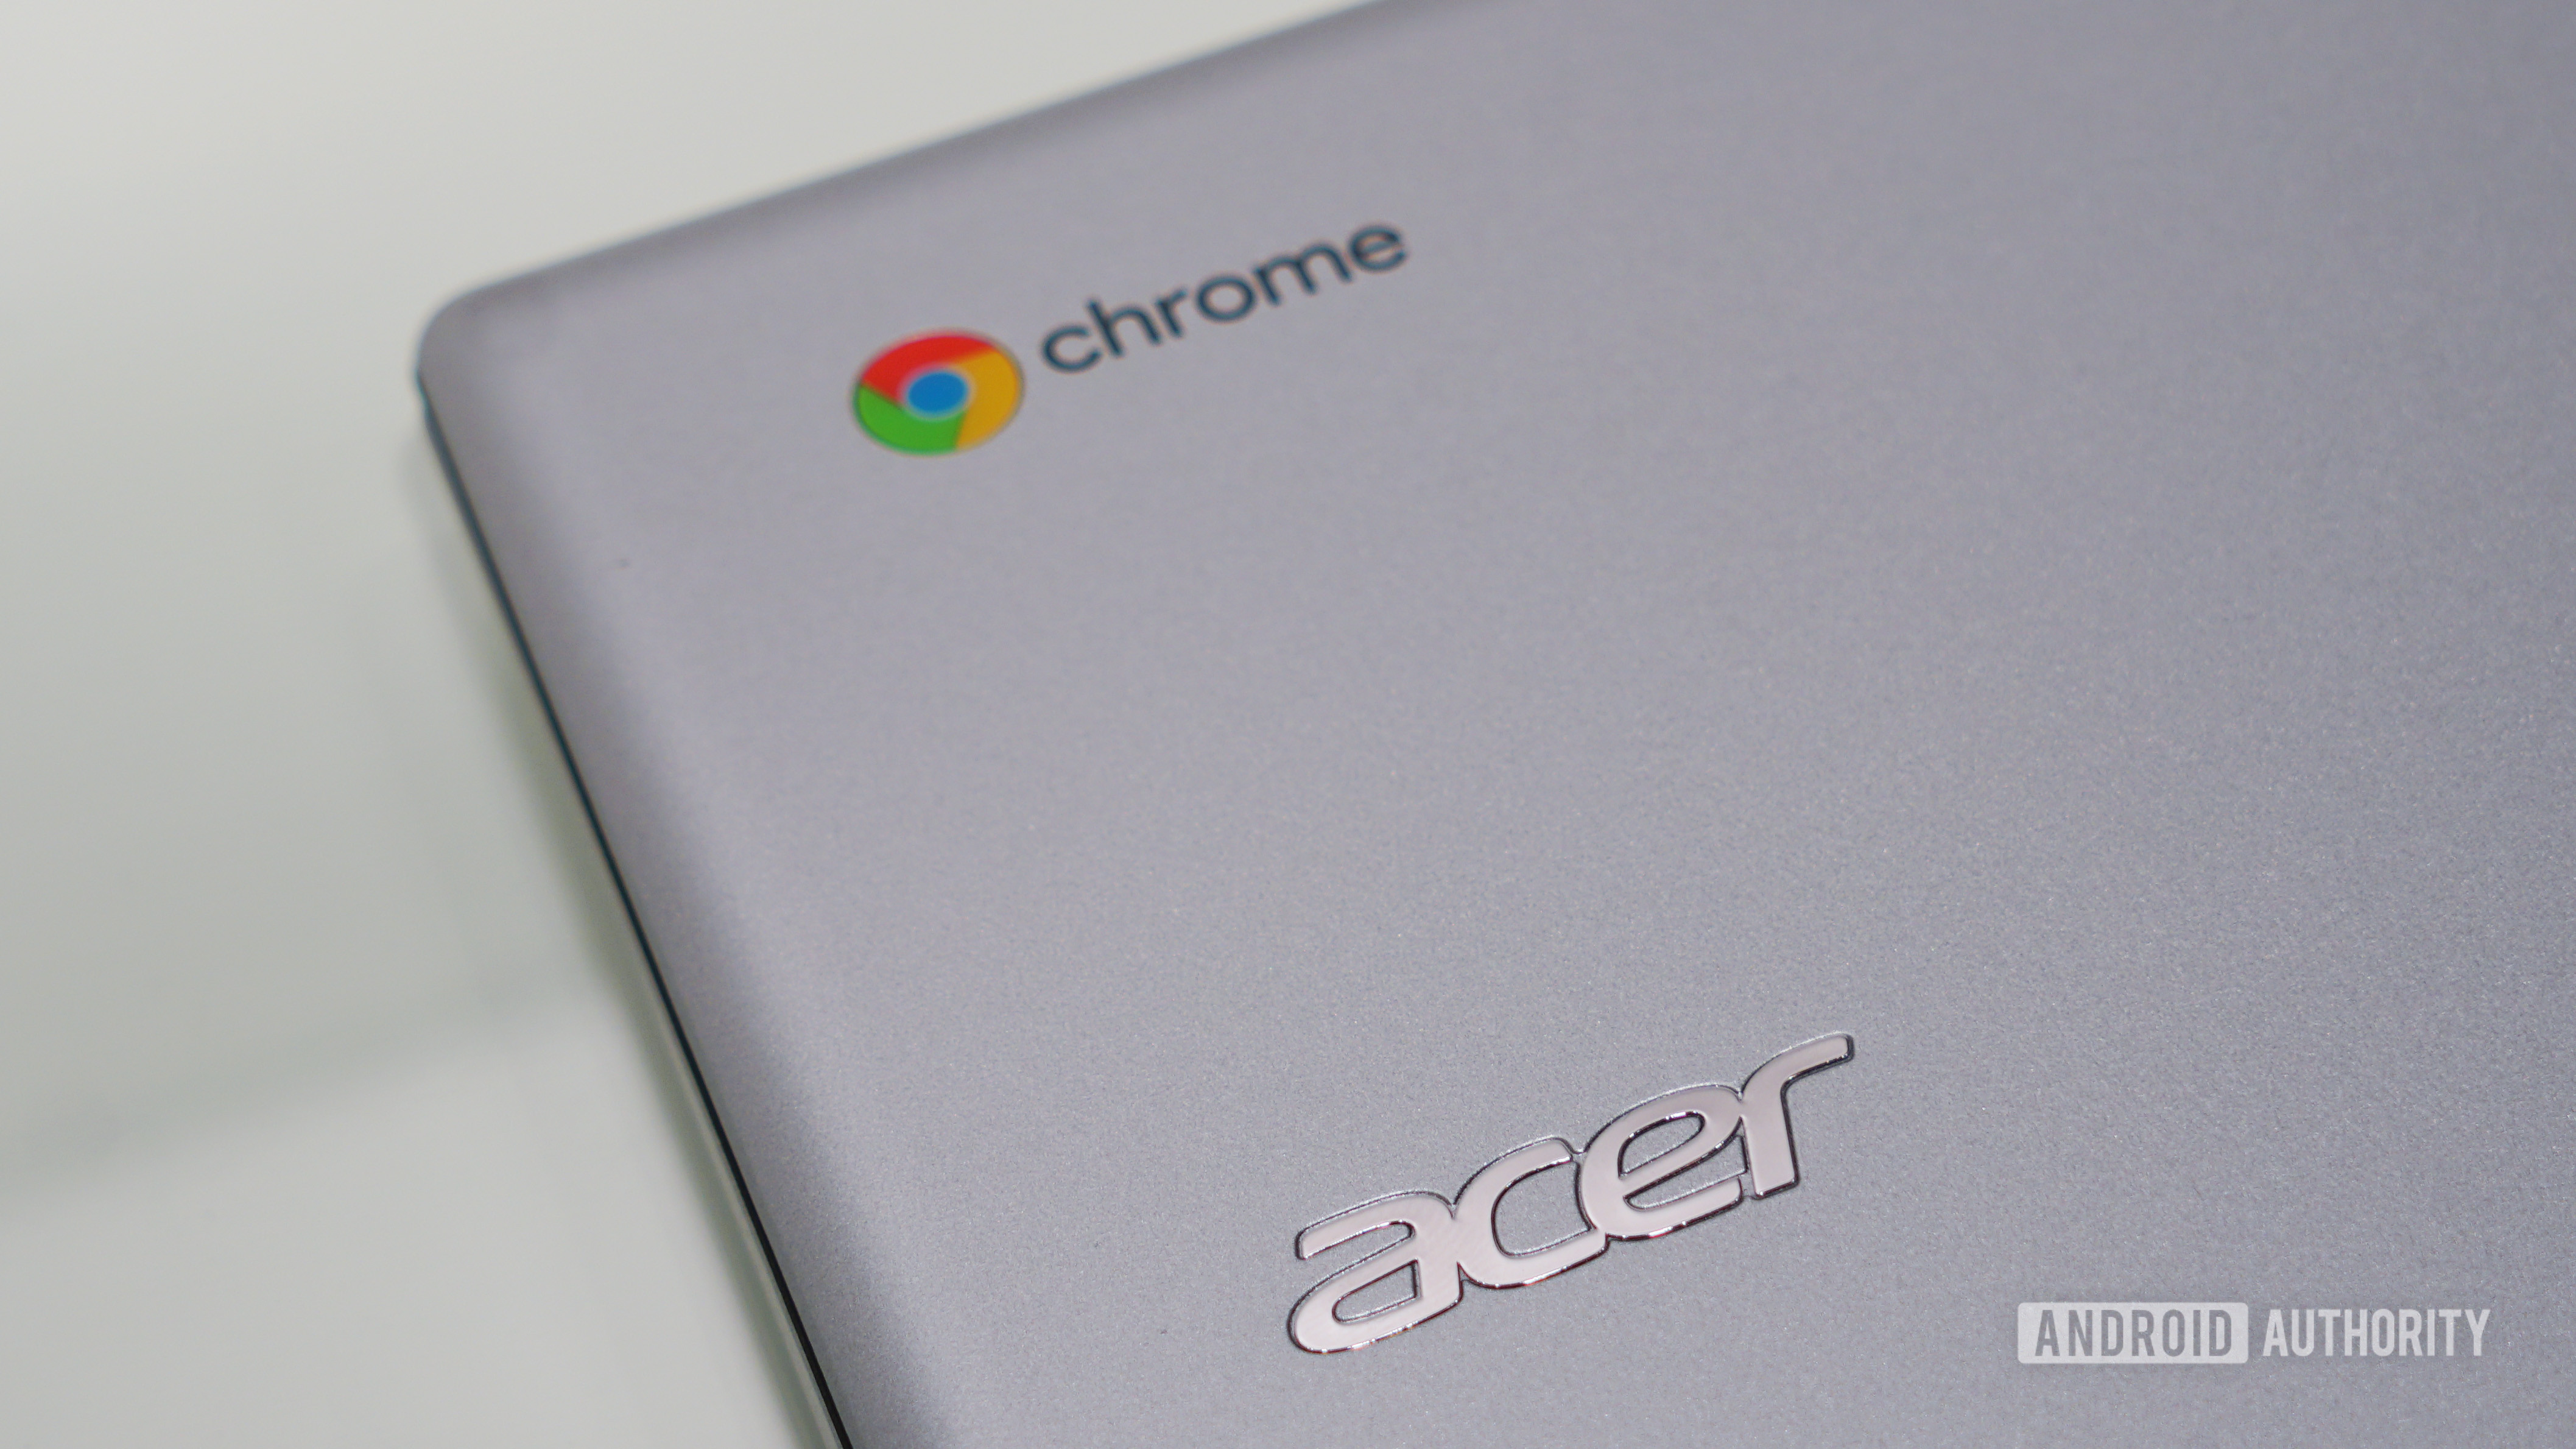 Acer Chrome logo on Chromebook